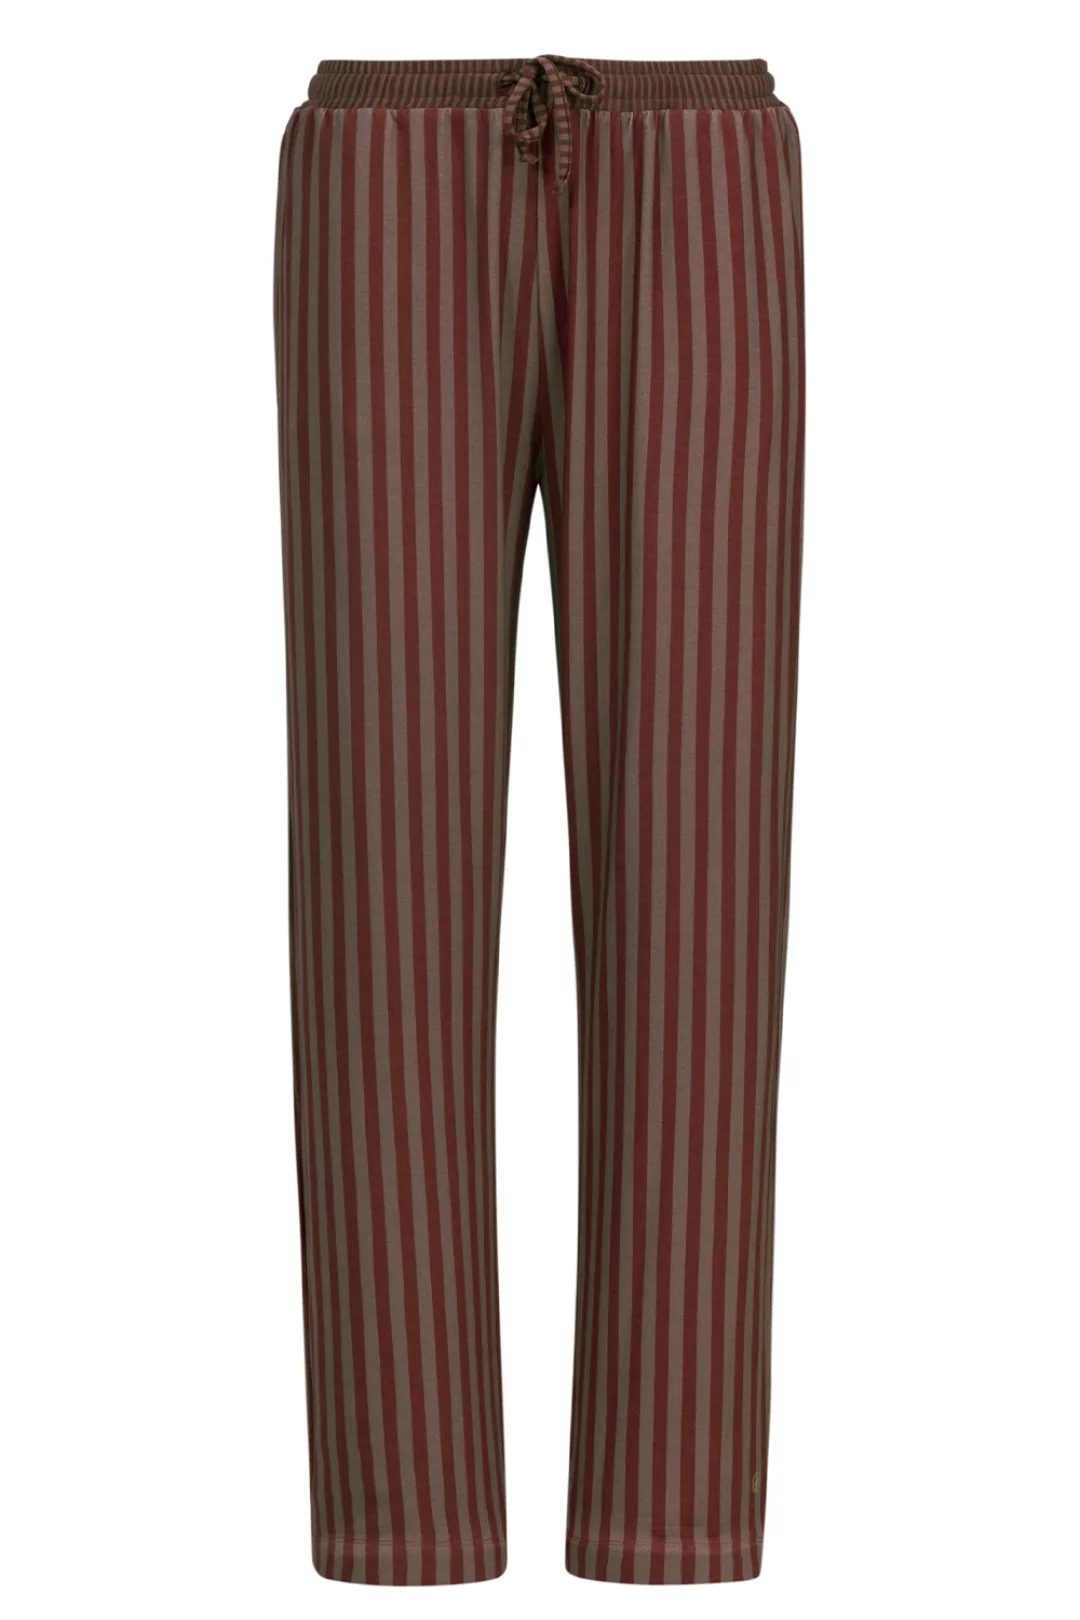 Pip Studio Belin Sumo Hose lang stripe Loungewear 2 42 mehrfarbig günstig online kaufen